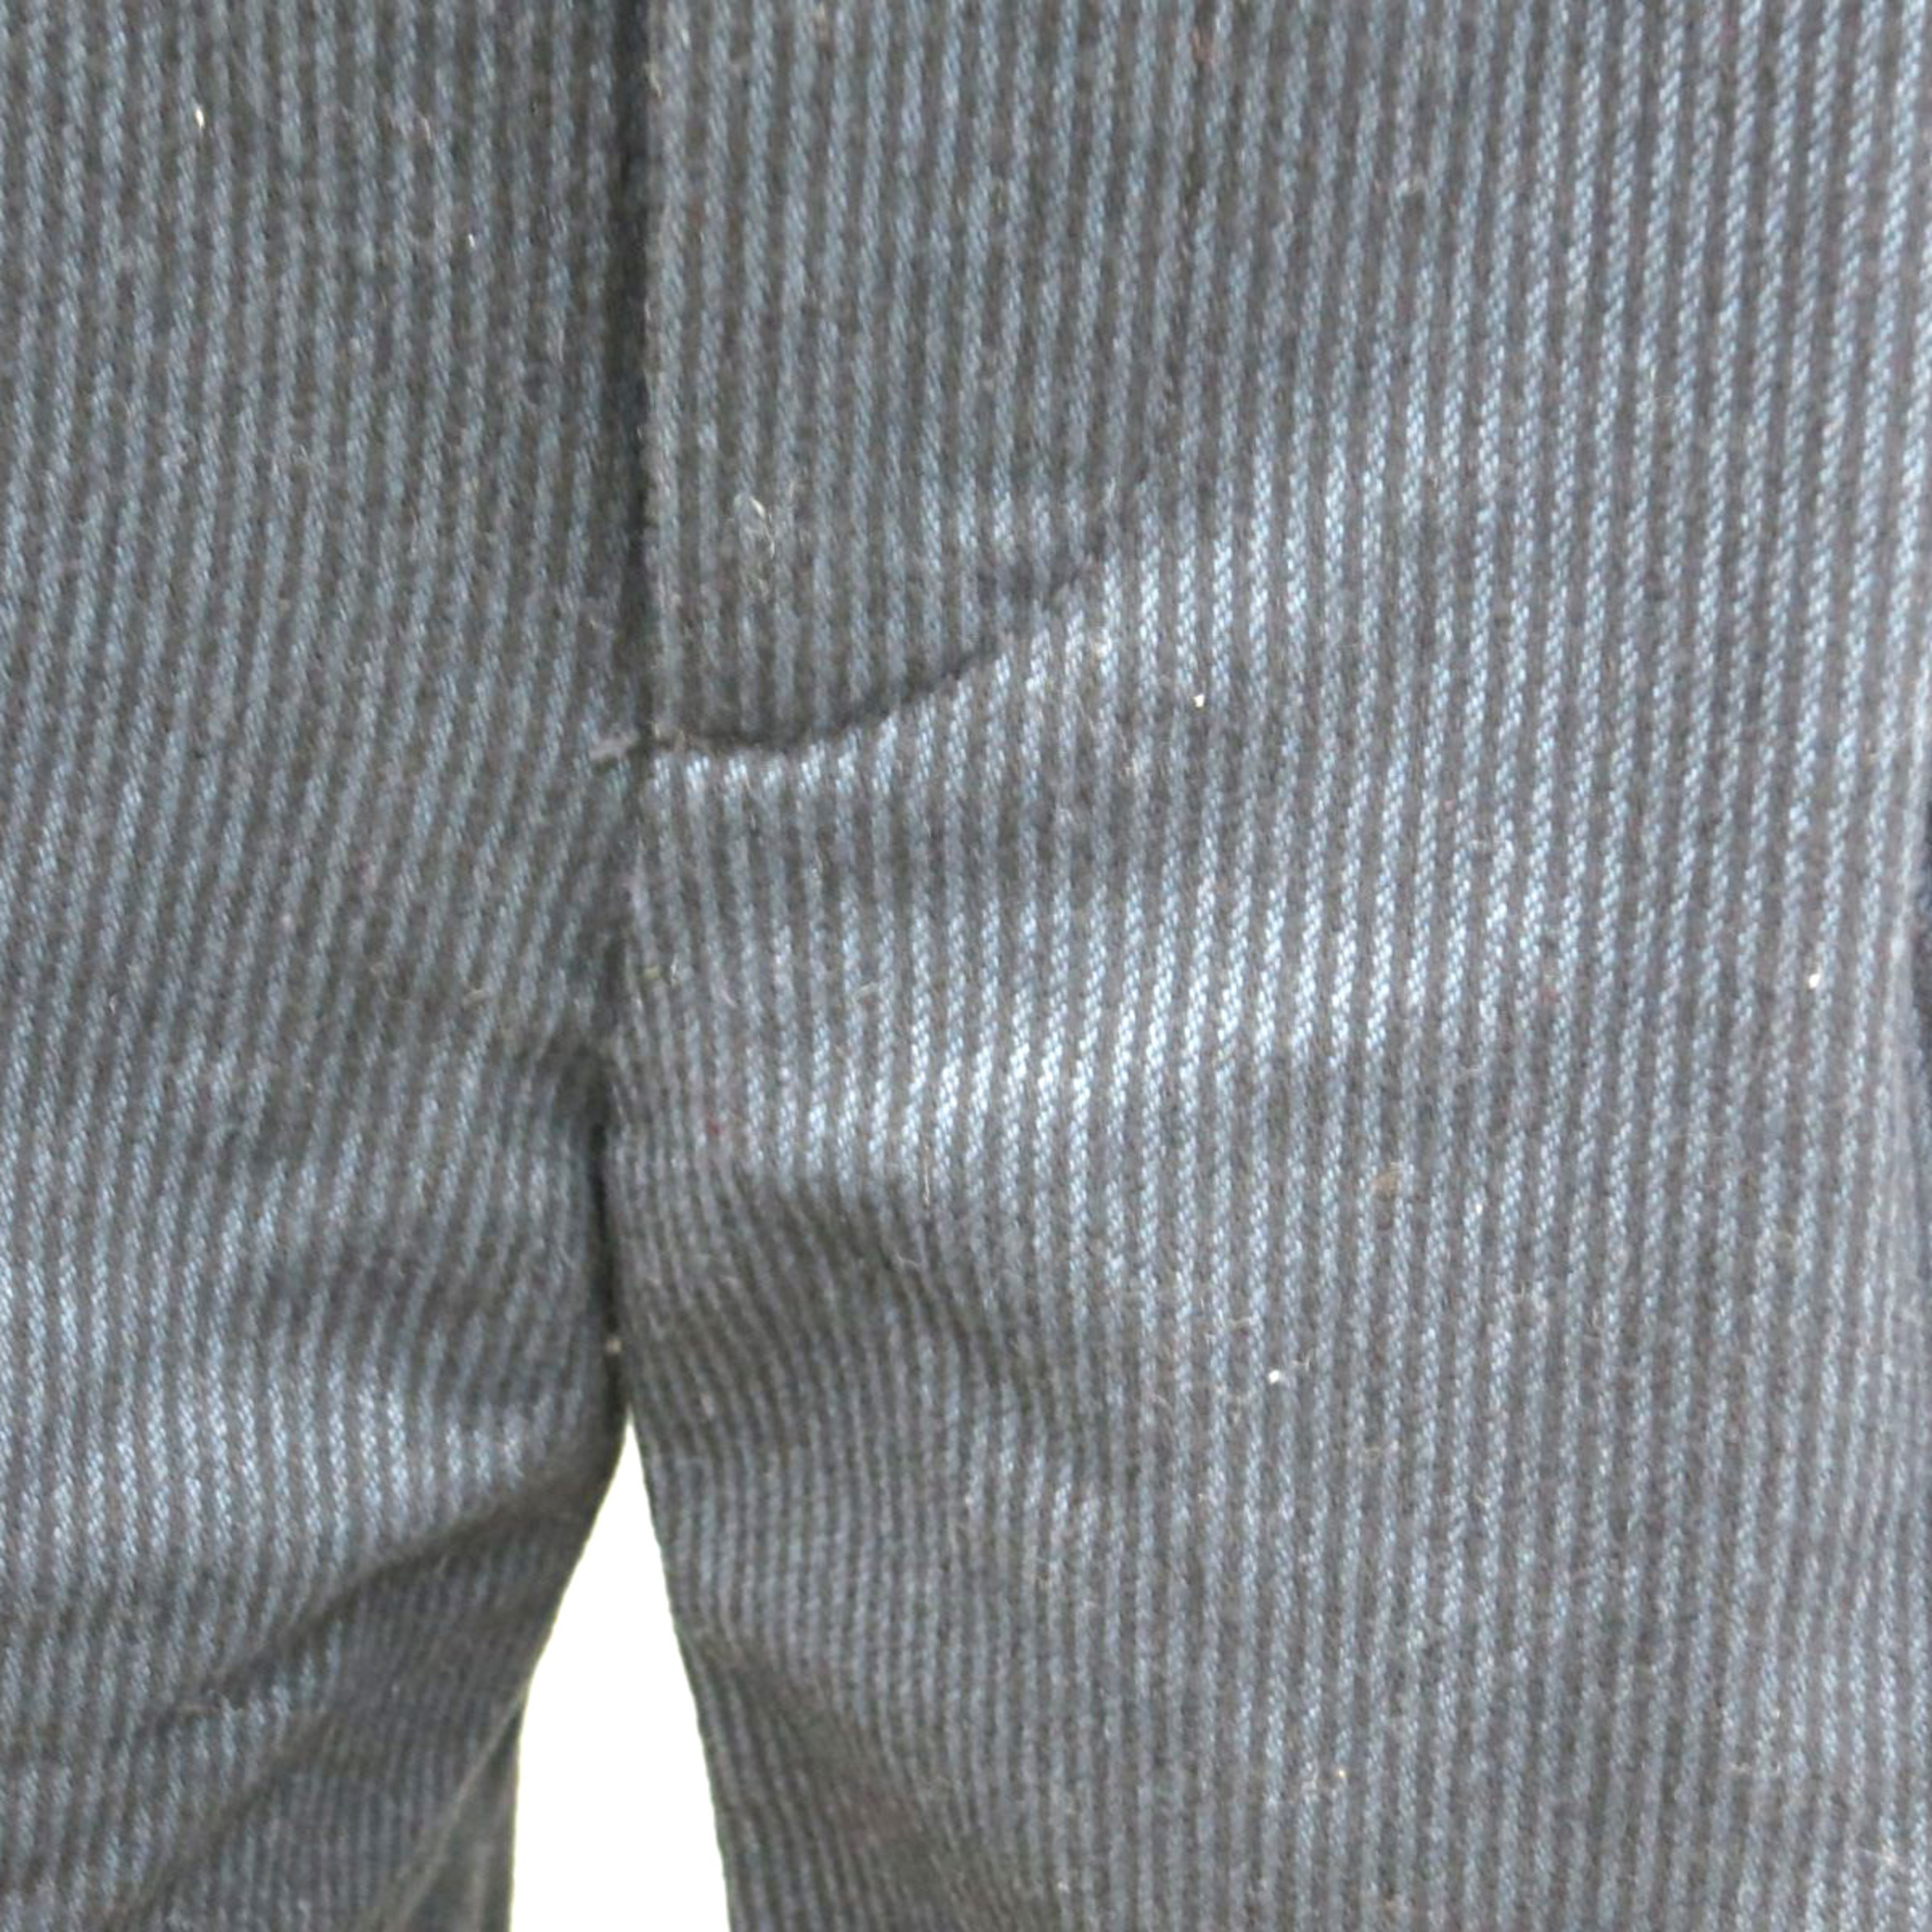 Marc Jacobs Stripe Half Pants Wool/Cotton Black/Blue 2 Ladies